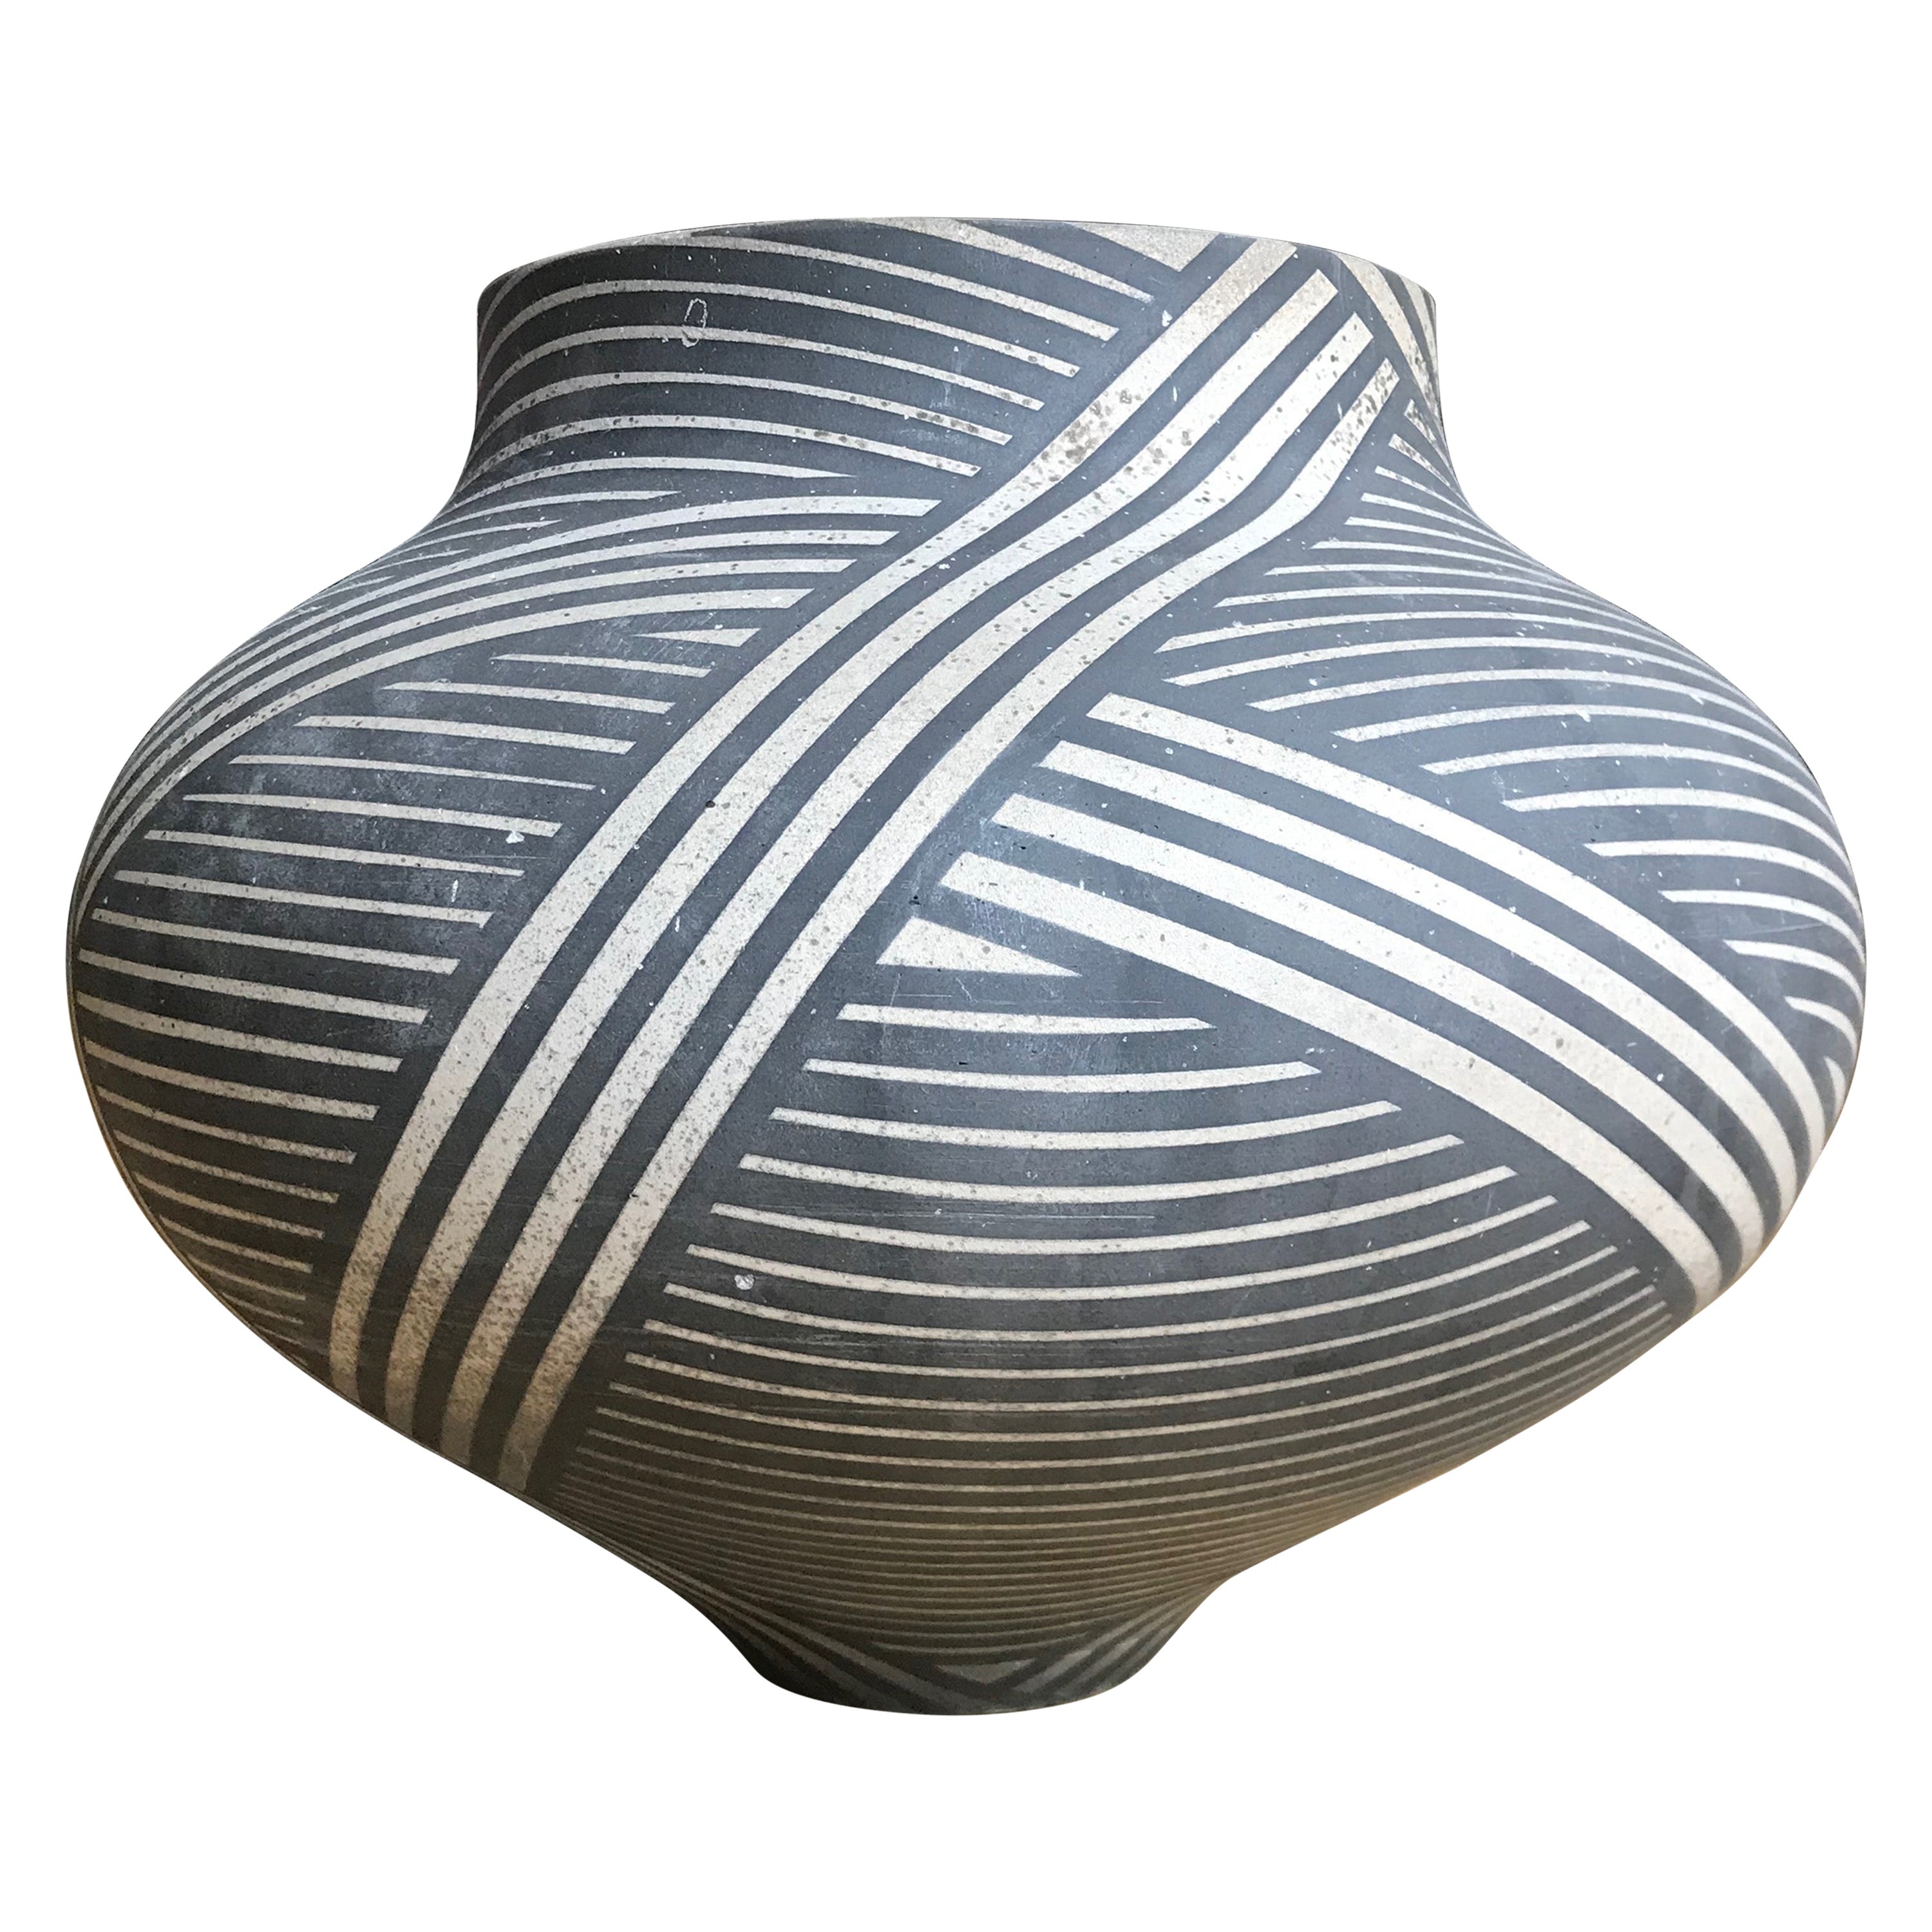 Nickolas Bernard Large Acoma Style Studio Pottery Vase or Planter 